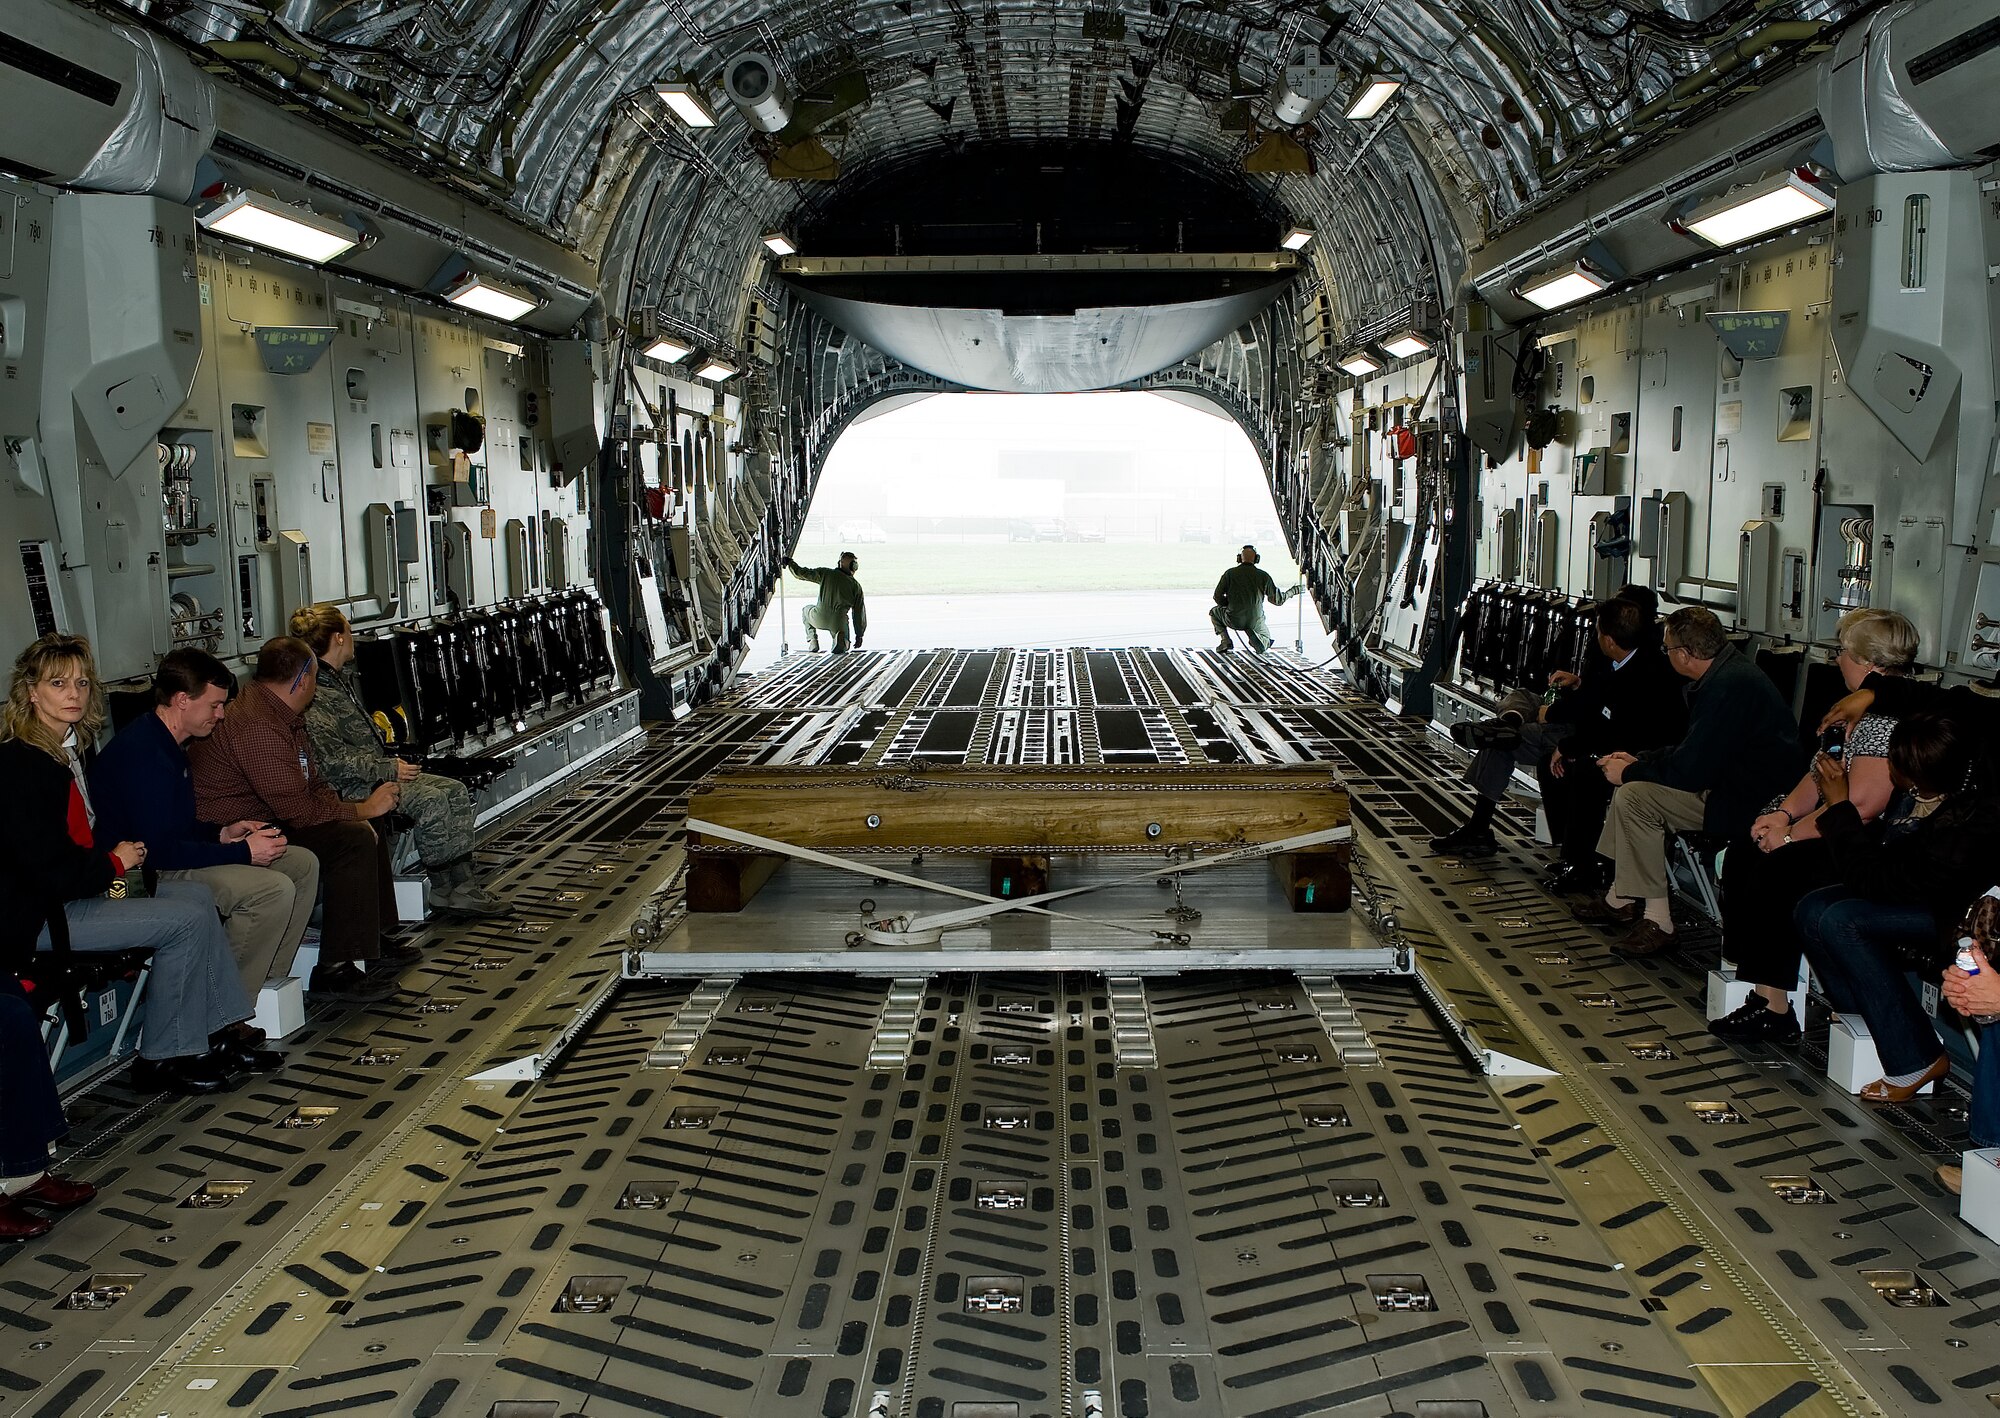 (U.S. Air Force photo by Airman 1st Class Jacob Morgan)